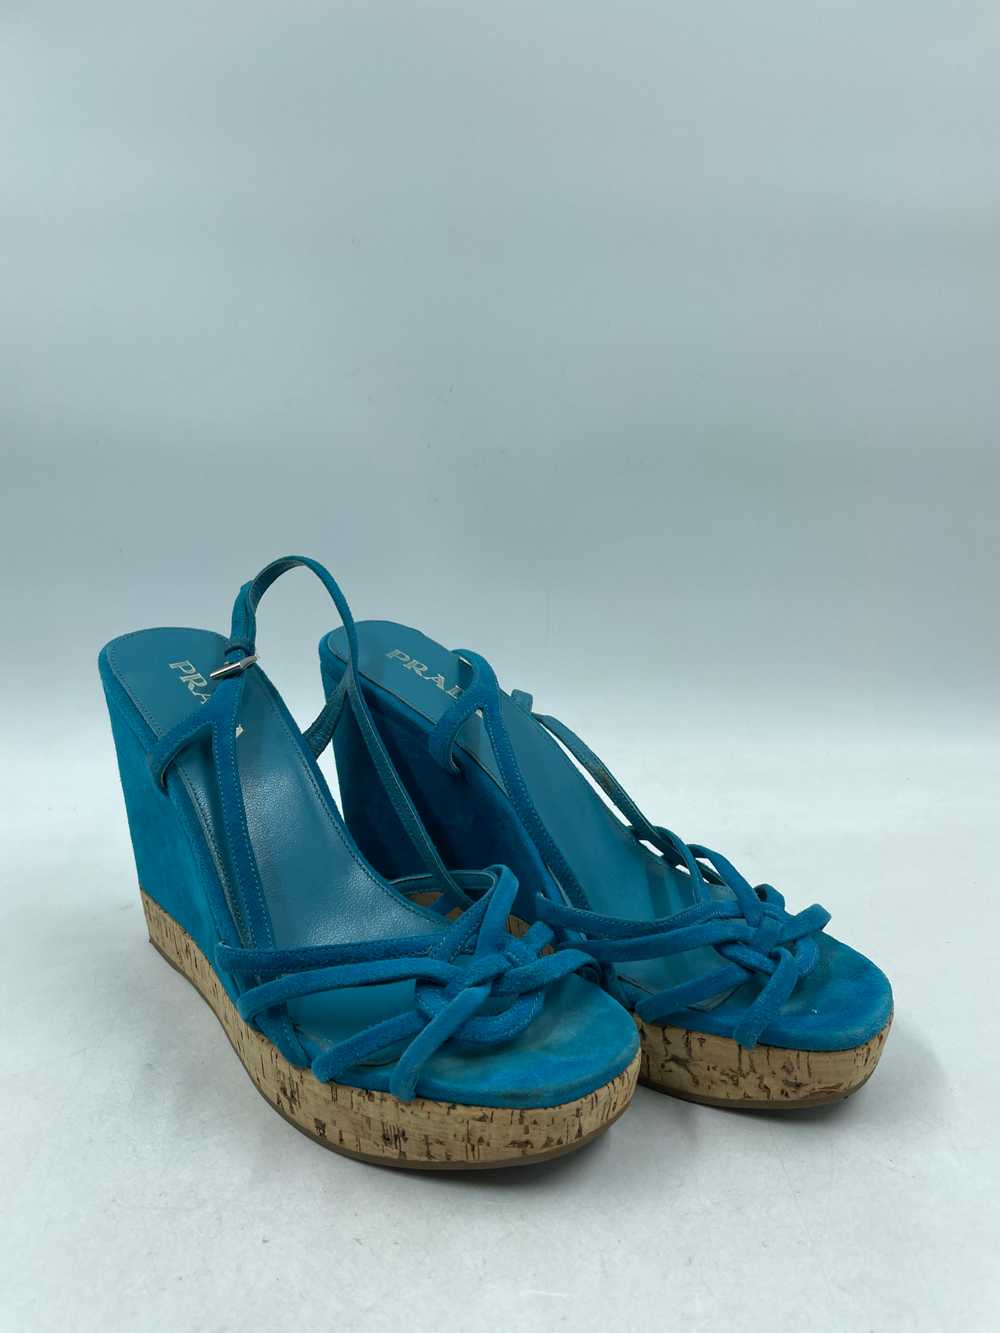 Authentic Prada Turquoise Wedge Sandals W 7 - image 3